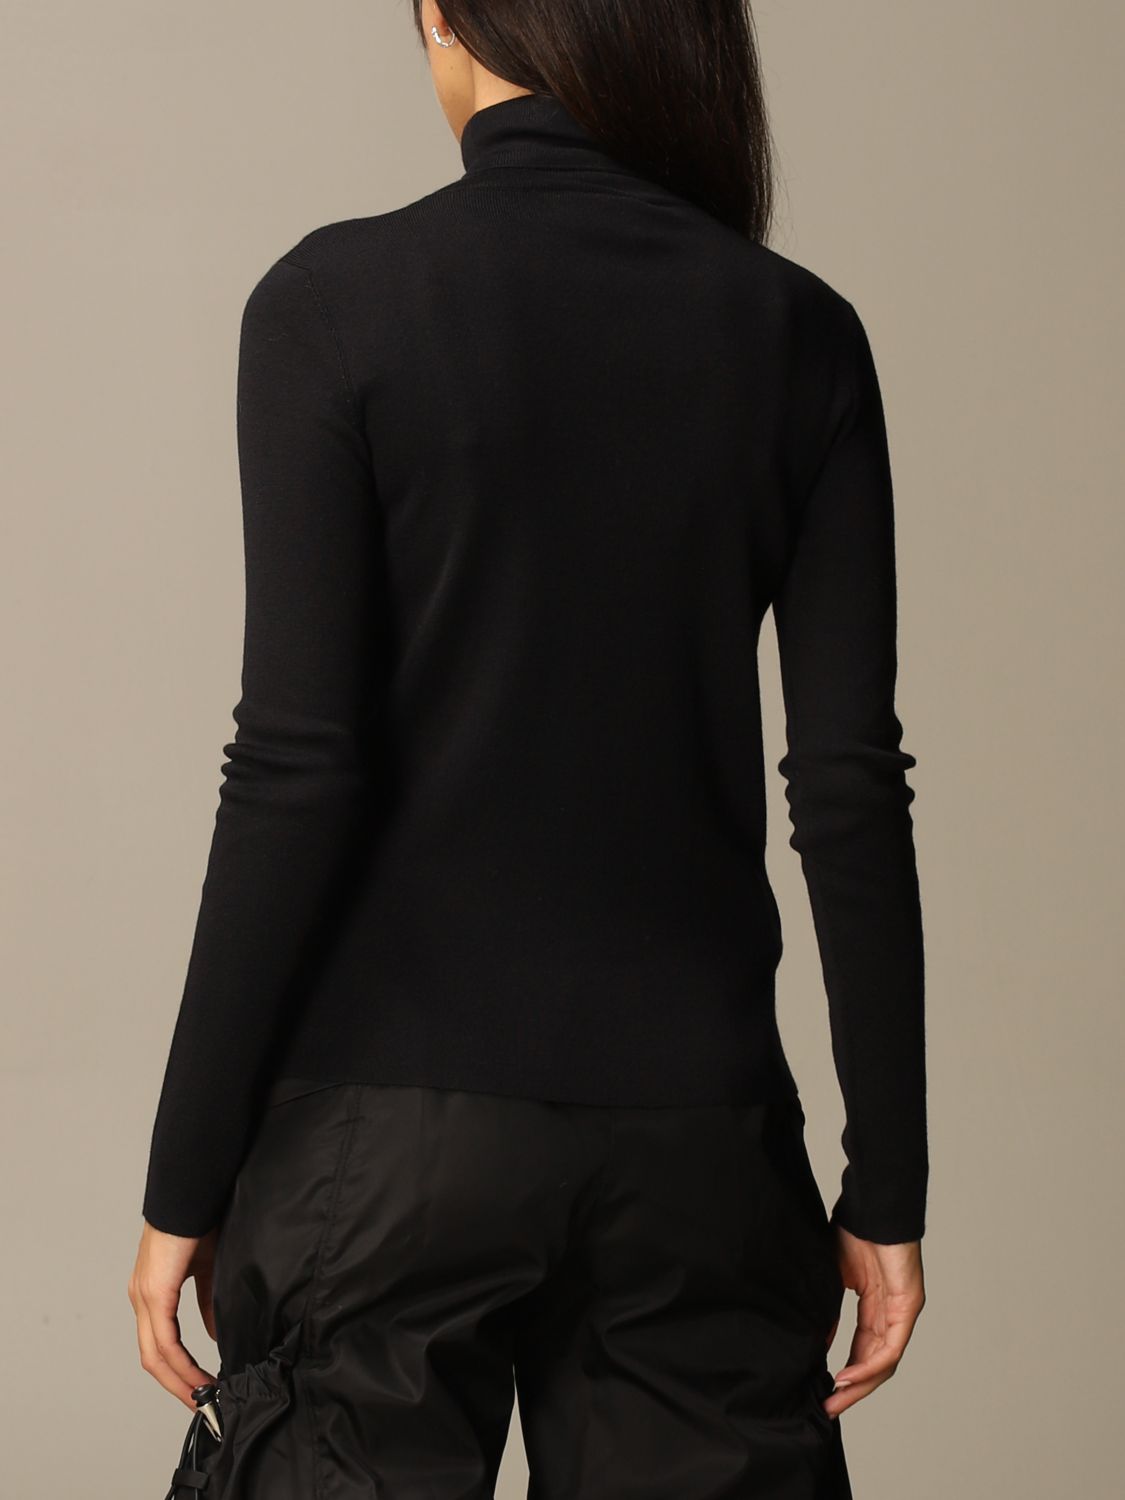 PRADA: basic long-sleeved turtleneck - Black | Sweater Prada P26183 40J